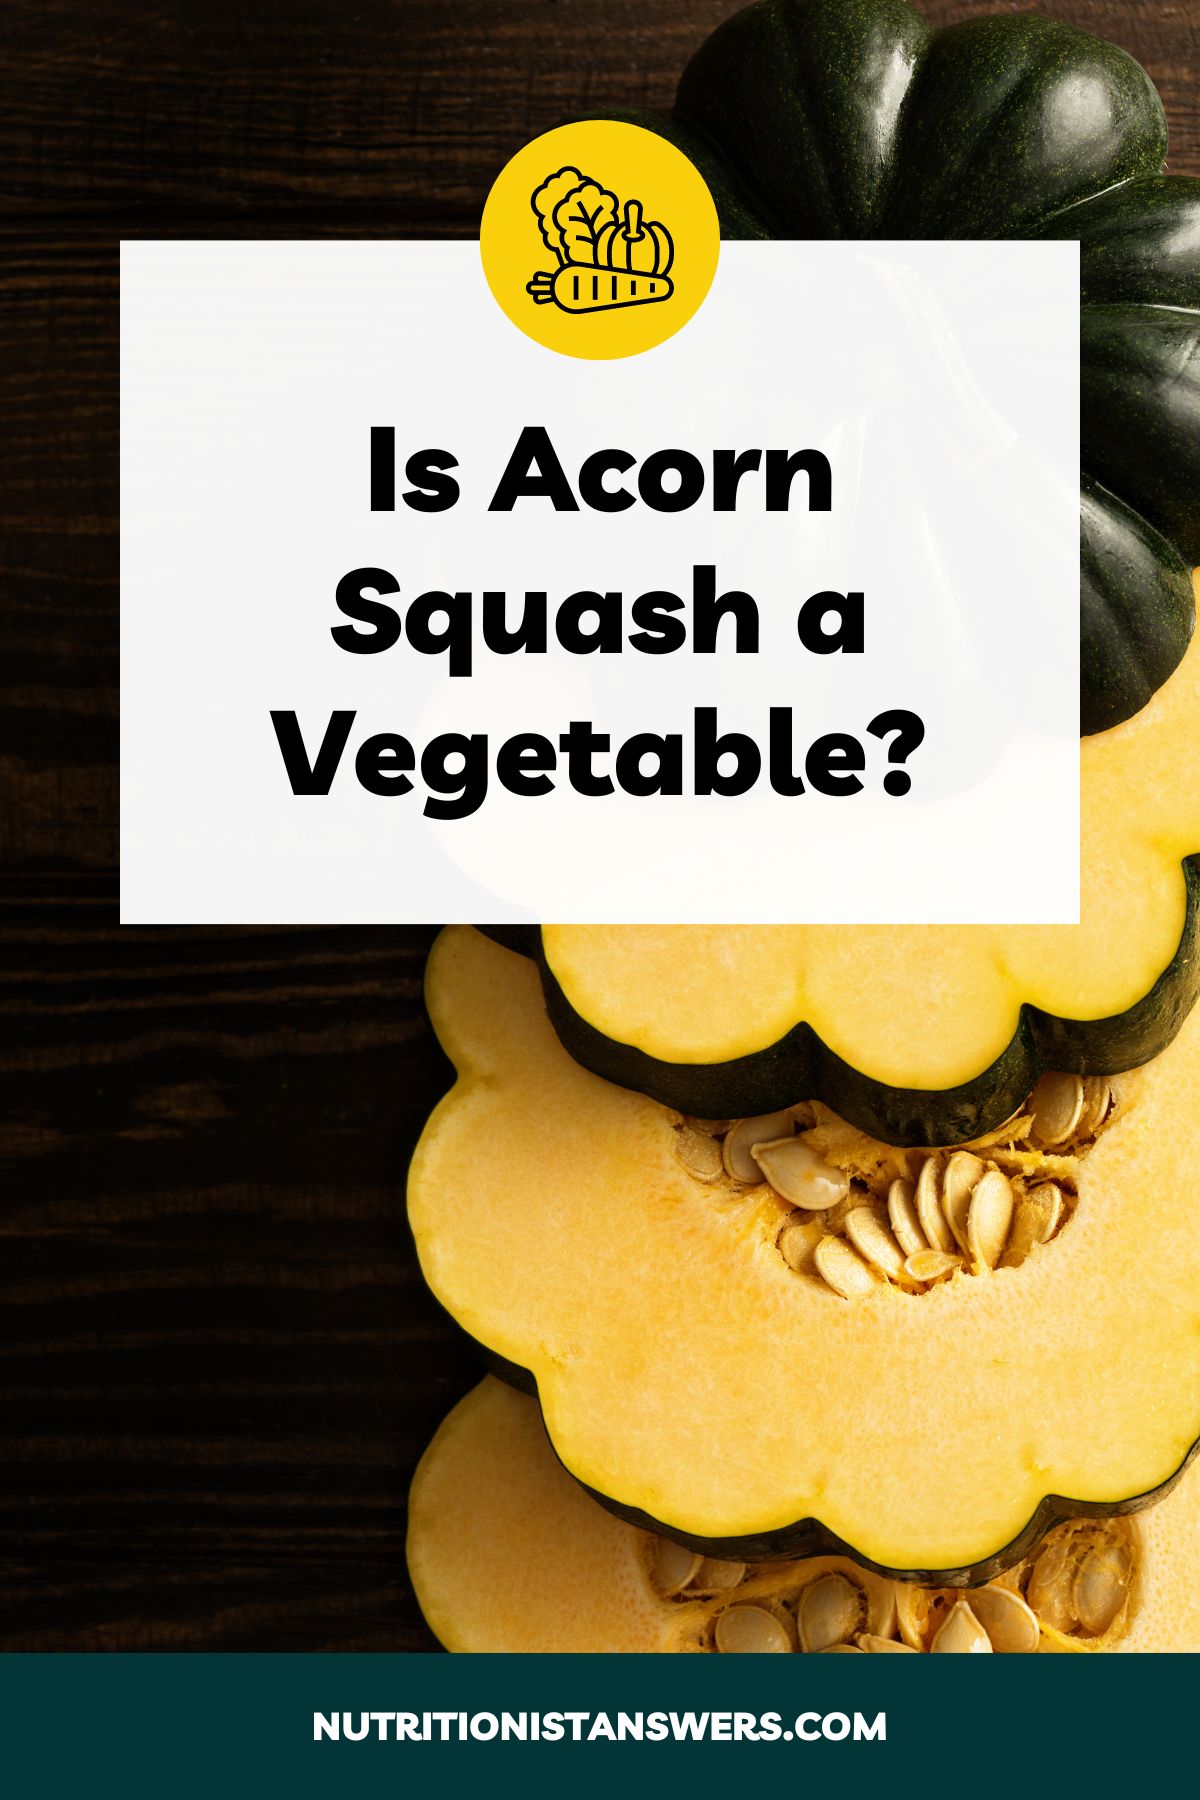 Is Acorn Squash a Vegetable?